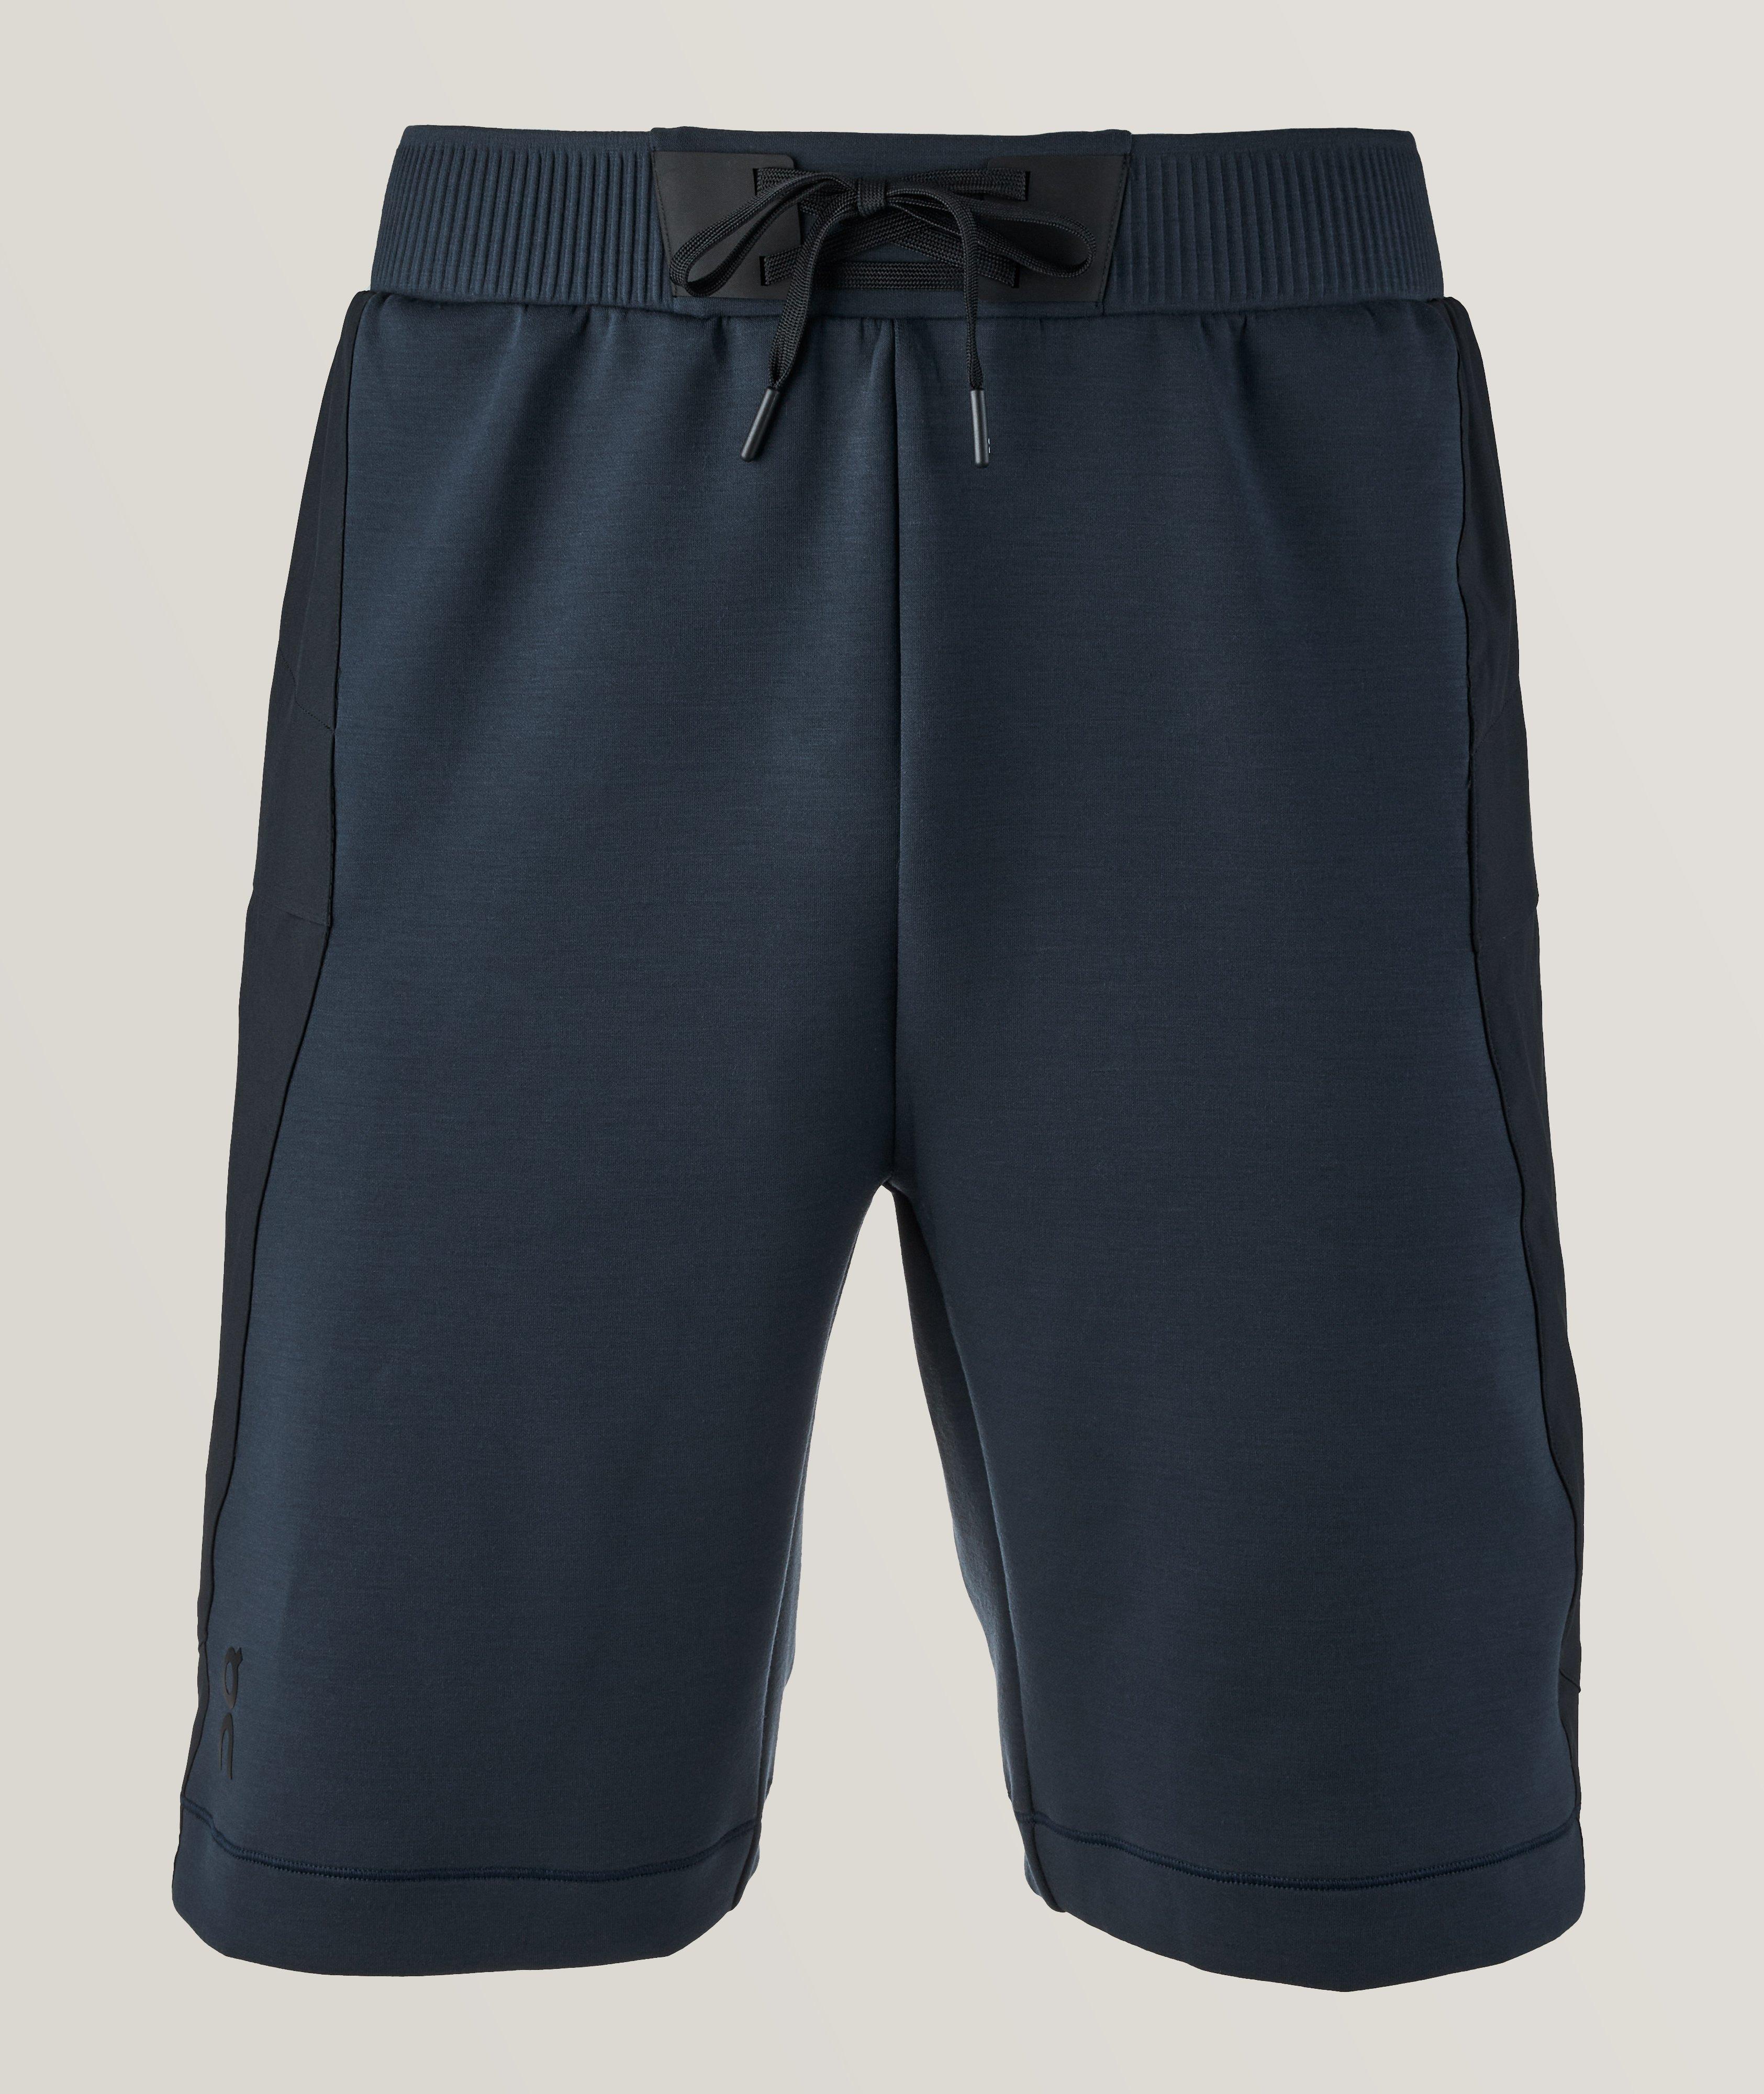 Technical Lightweight Pocket Shorts image 0